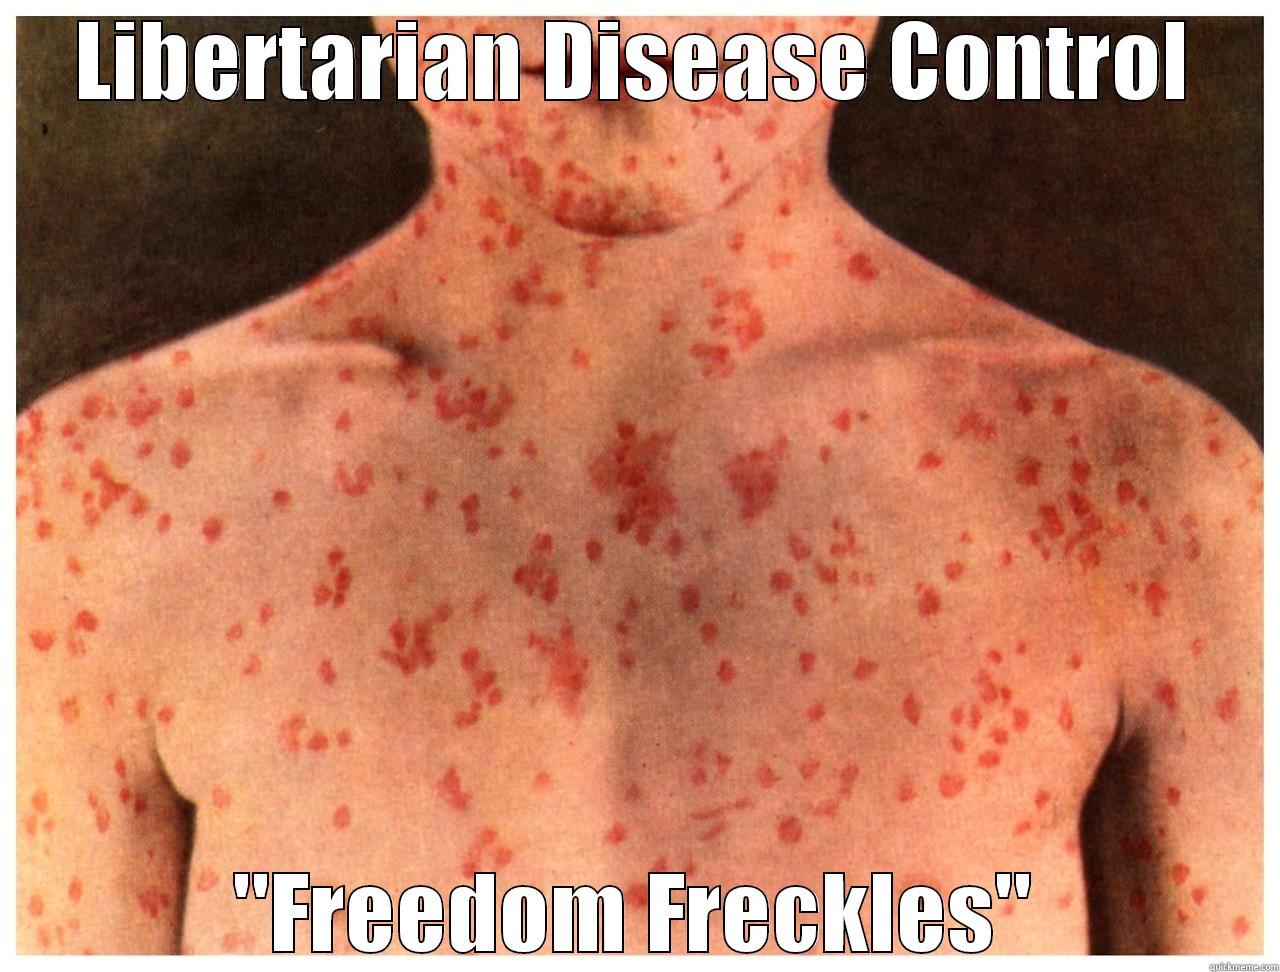 Freedom Freckles - LIBERTARIAN DISEASE CONTROL 